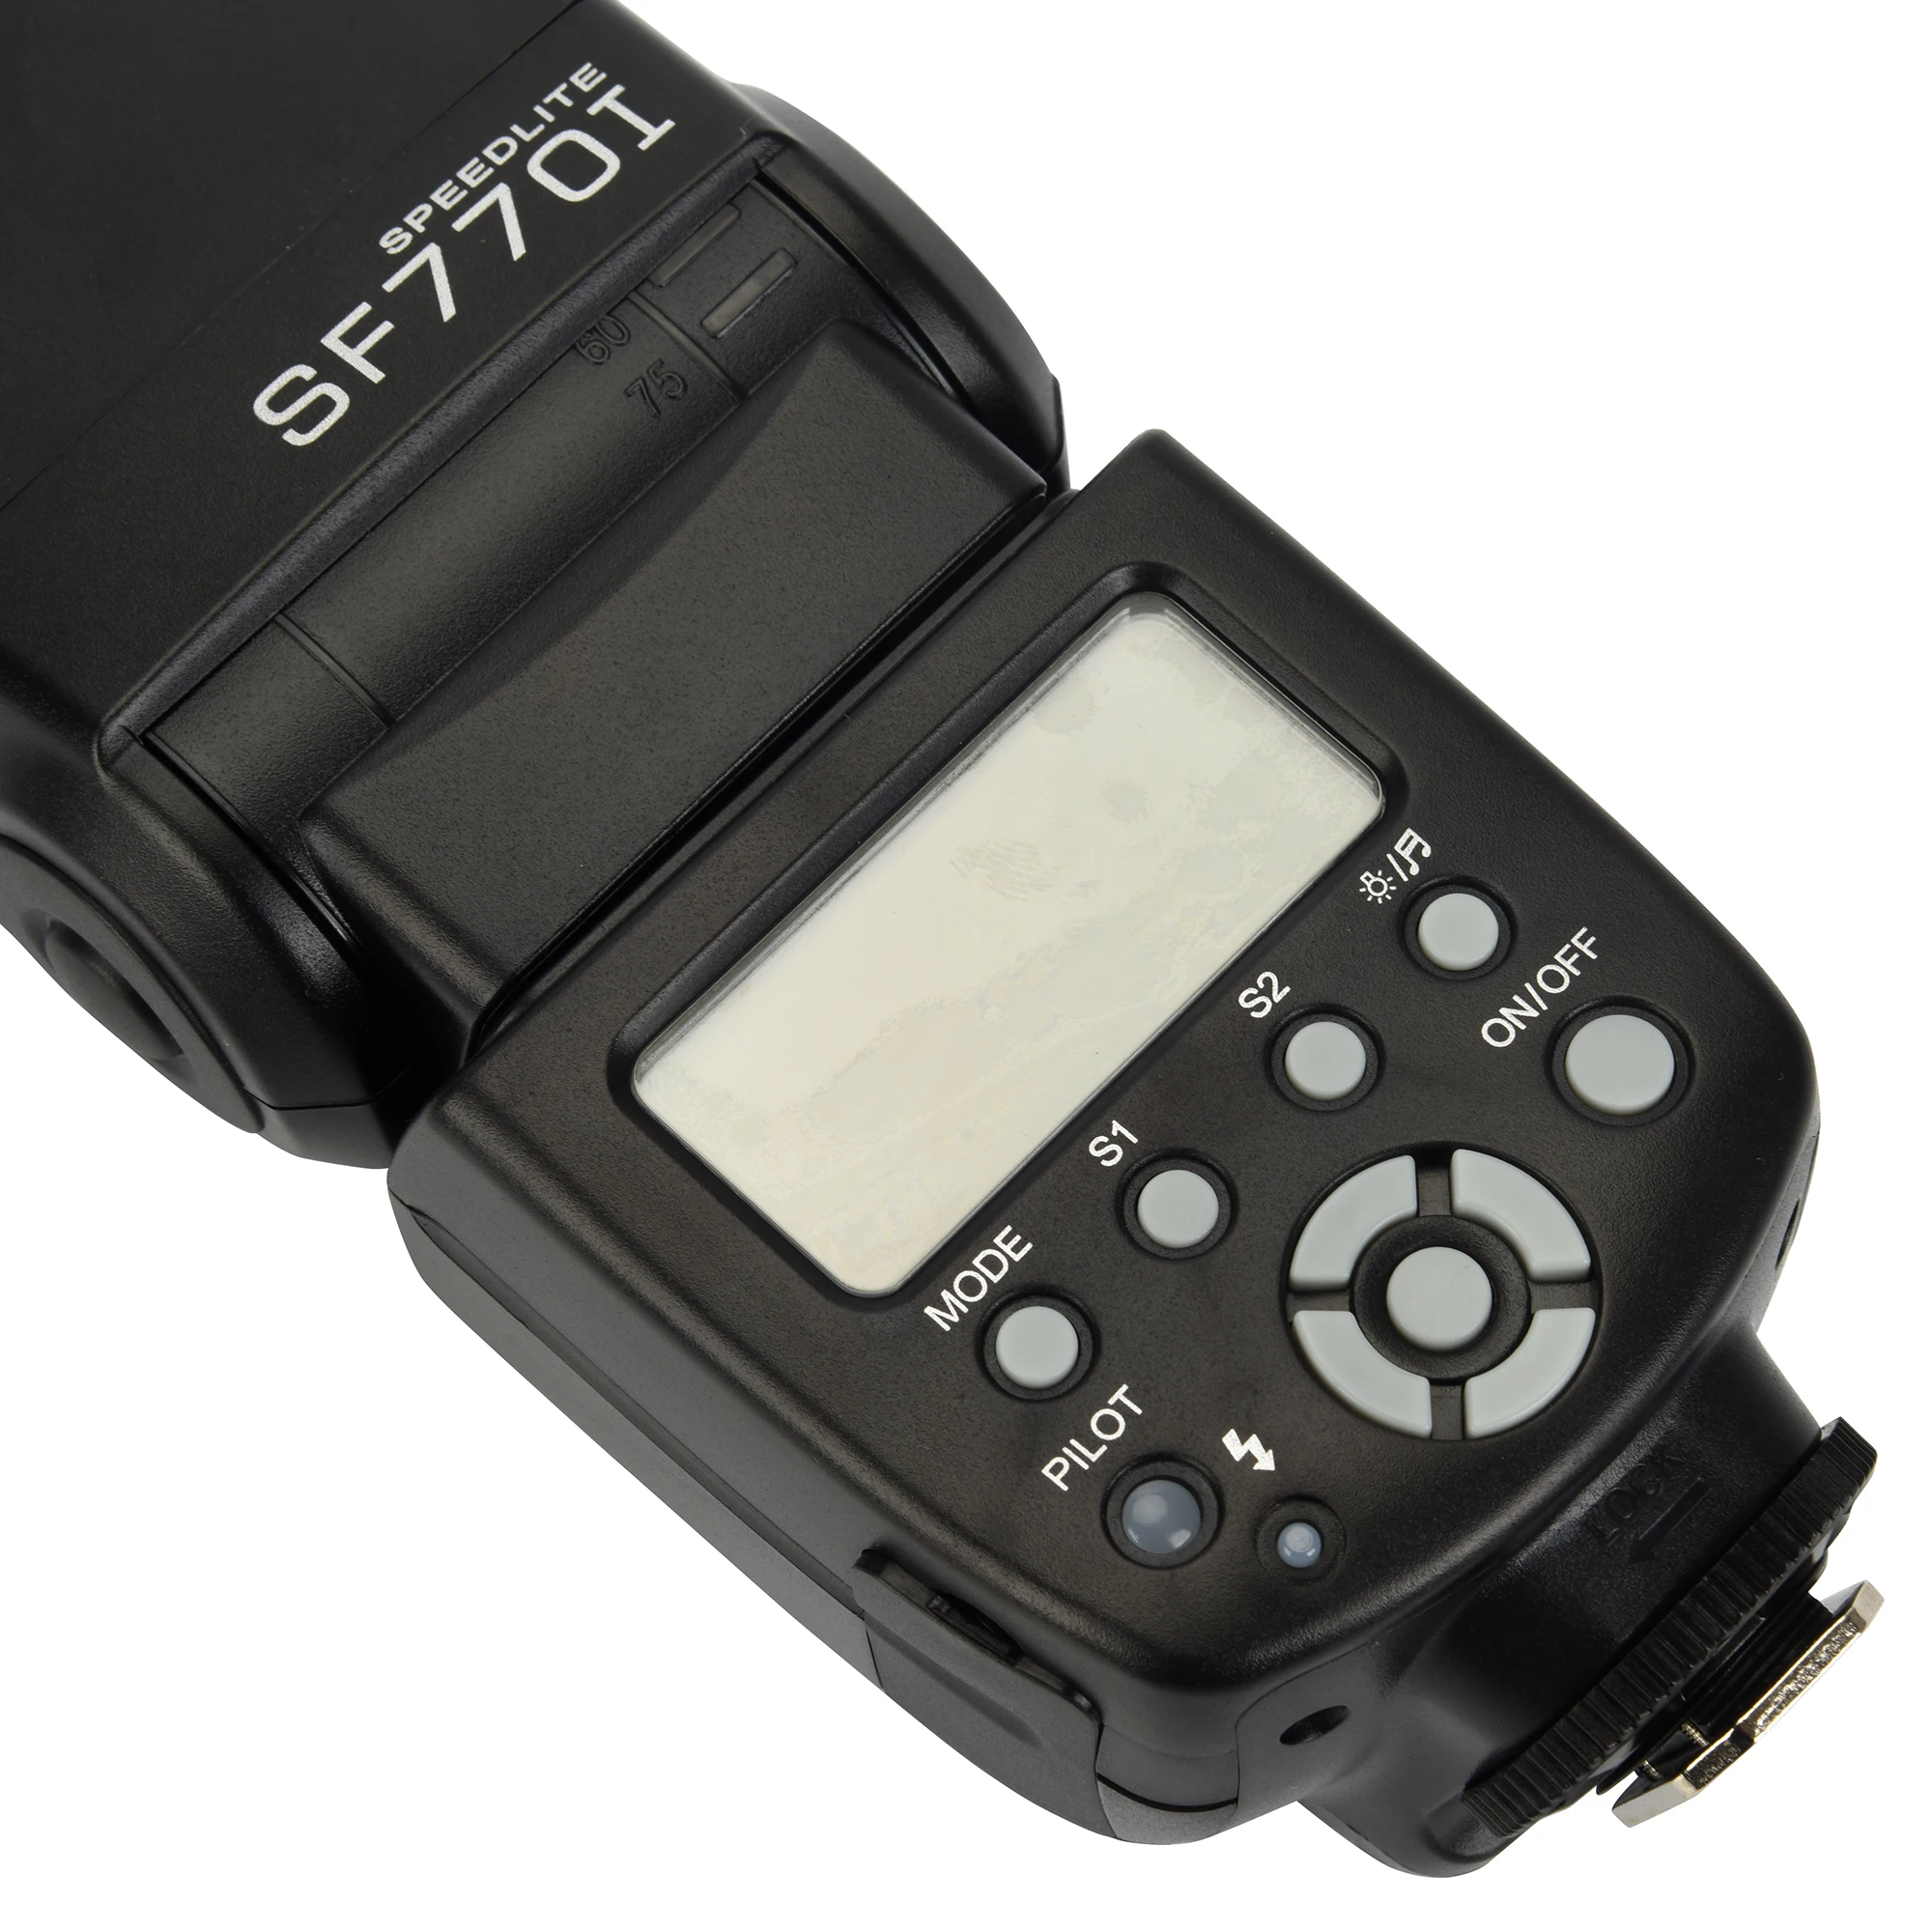 SF770I Вспышка Speedlite для Canon Nikon Pentax Olympus Panasonic цифровая камера s со стандартной камерой вспышка